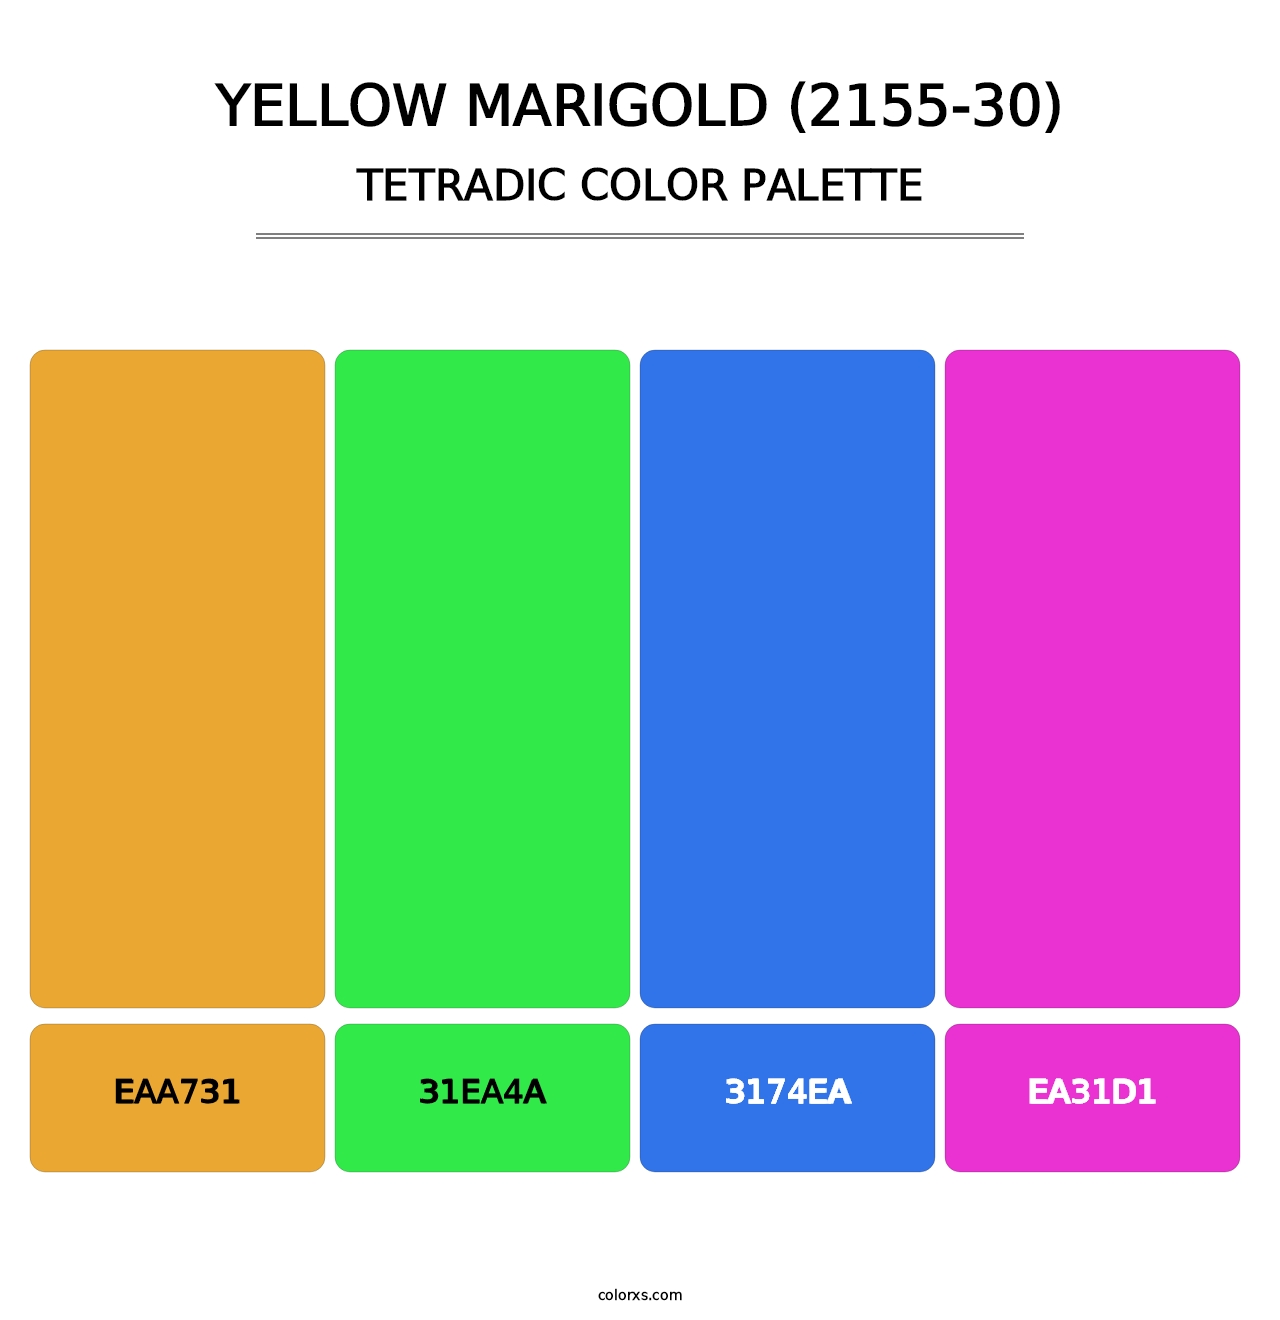 Yellow Marigold (2155-30) - Tetradic Color Palette